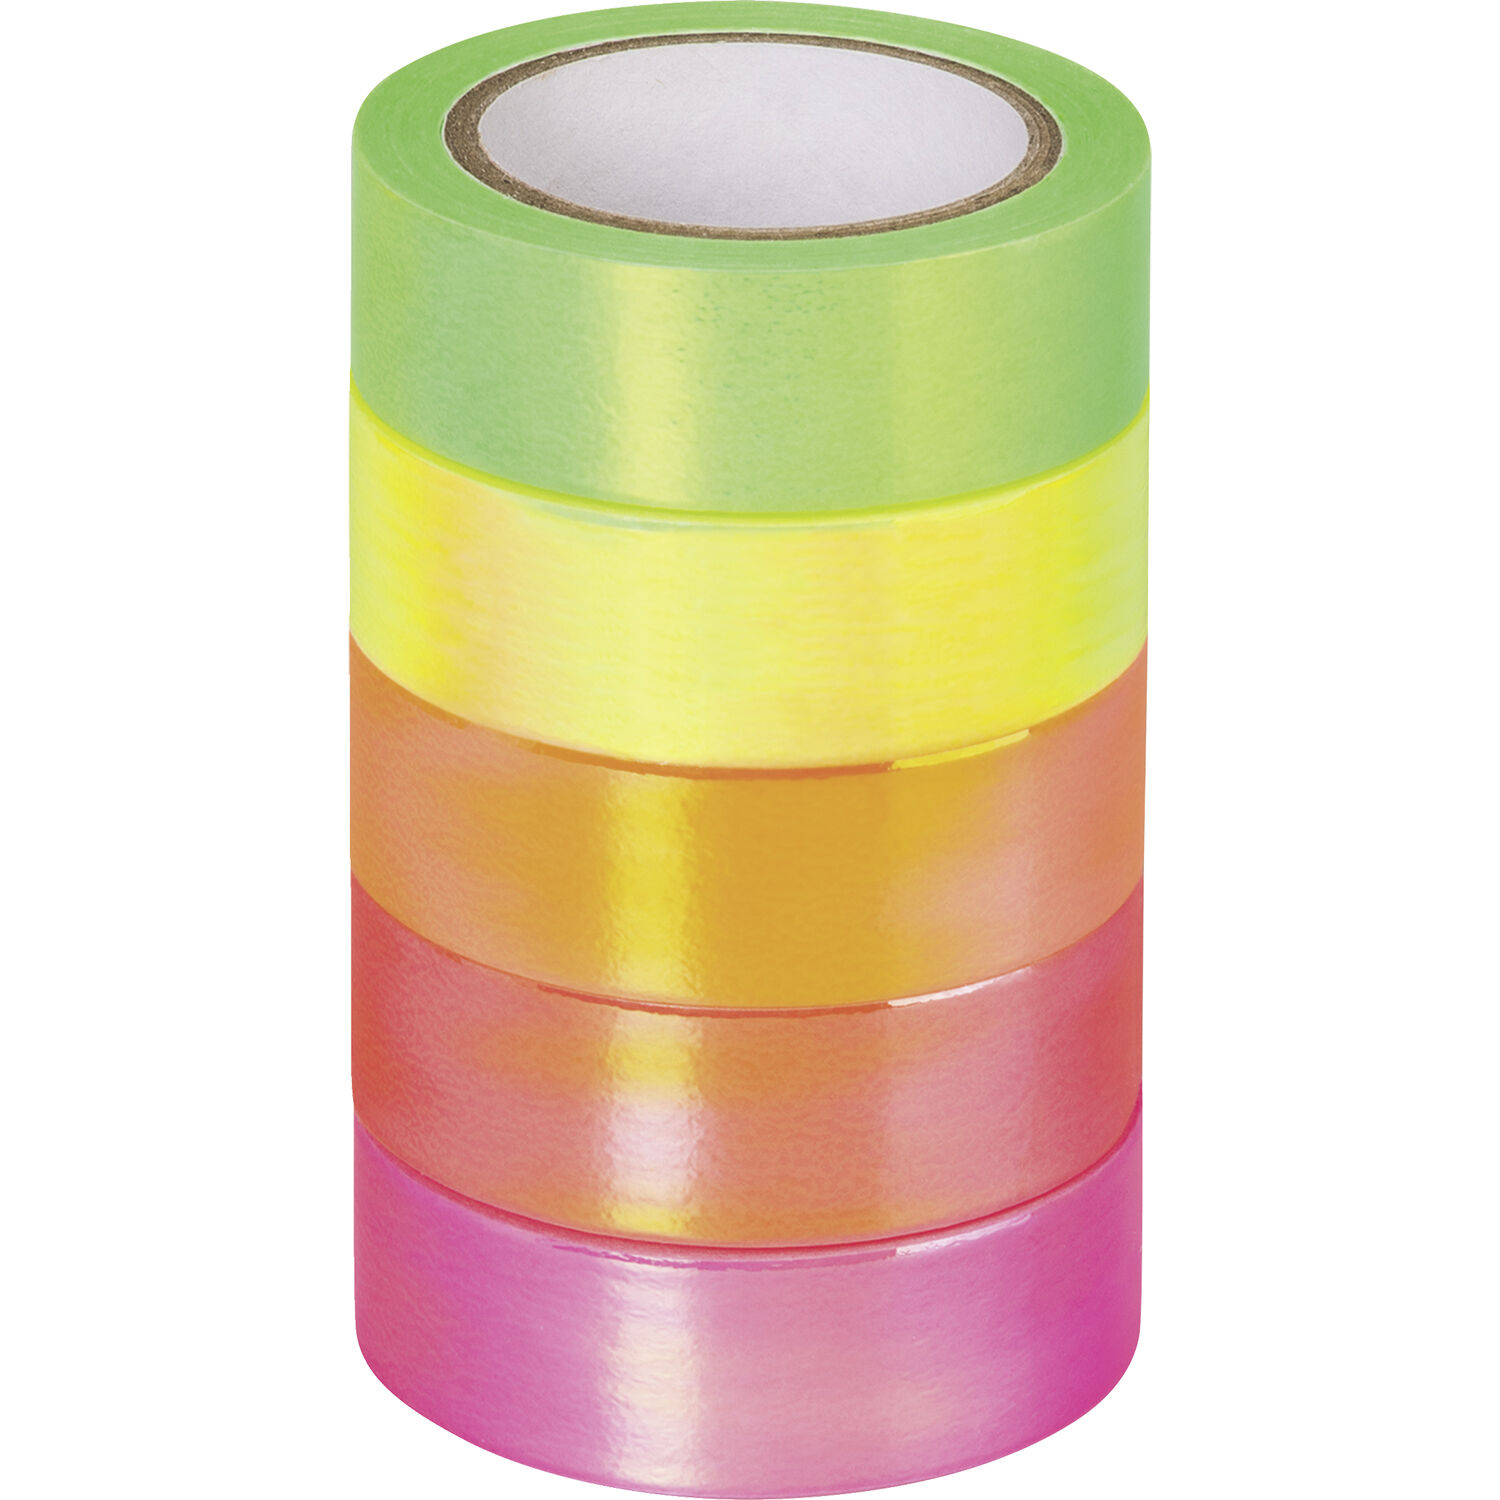 NEU Deko Tape / Klebeband, 5 Rollen, Neon Regenbogen Irisierend - Washi  Tape, Fabric- & Glitter-Tape Klebeband, Sticker & Co. Papiere & Co.  Produkte 